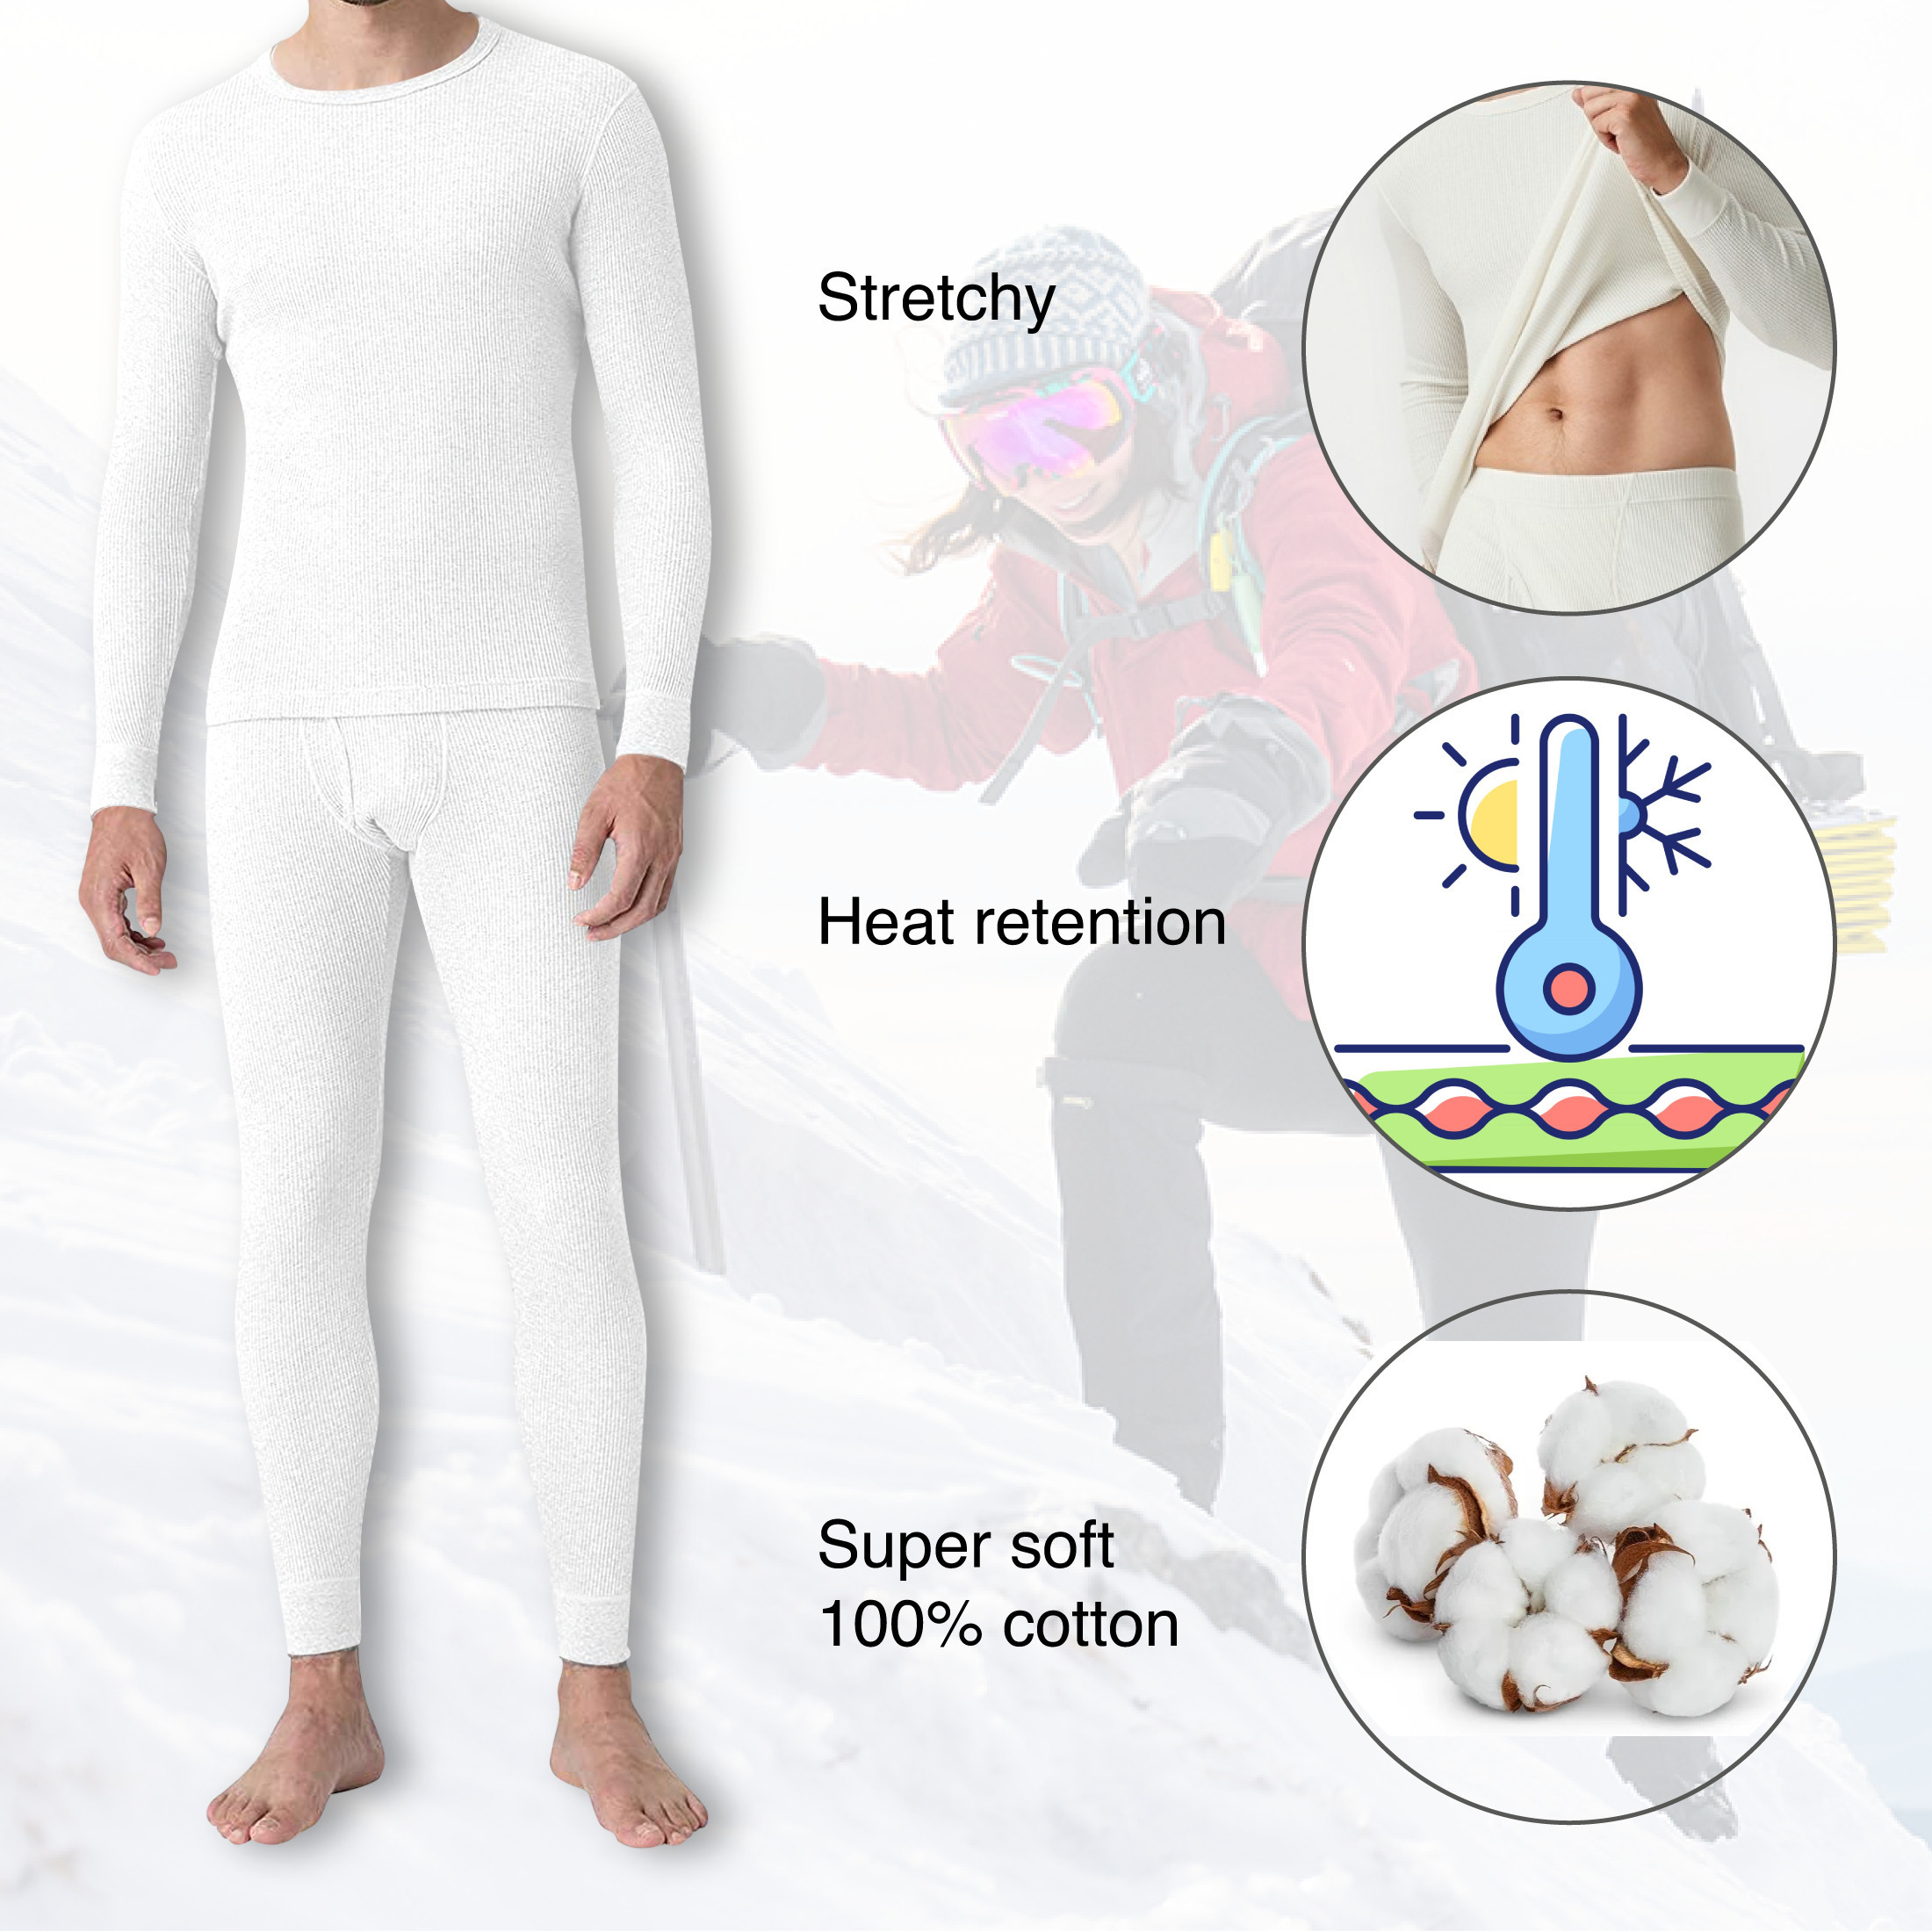 2-Sets: Men's Super Soft Cotton Waffle Knit Winter Thermal Underwear Set - Black & White, Small